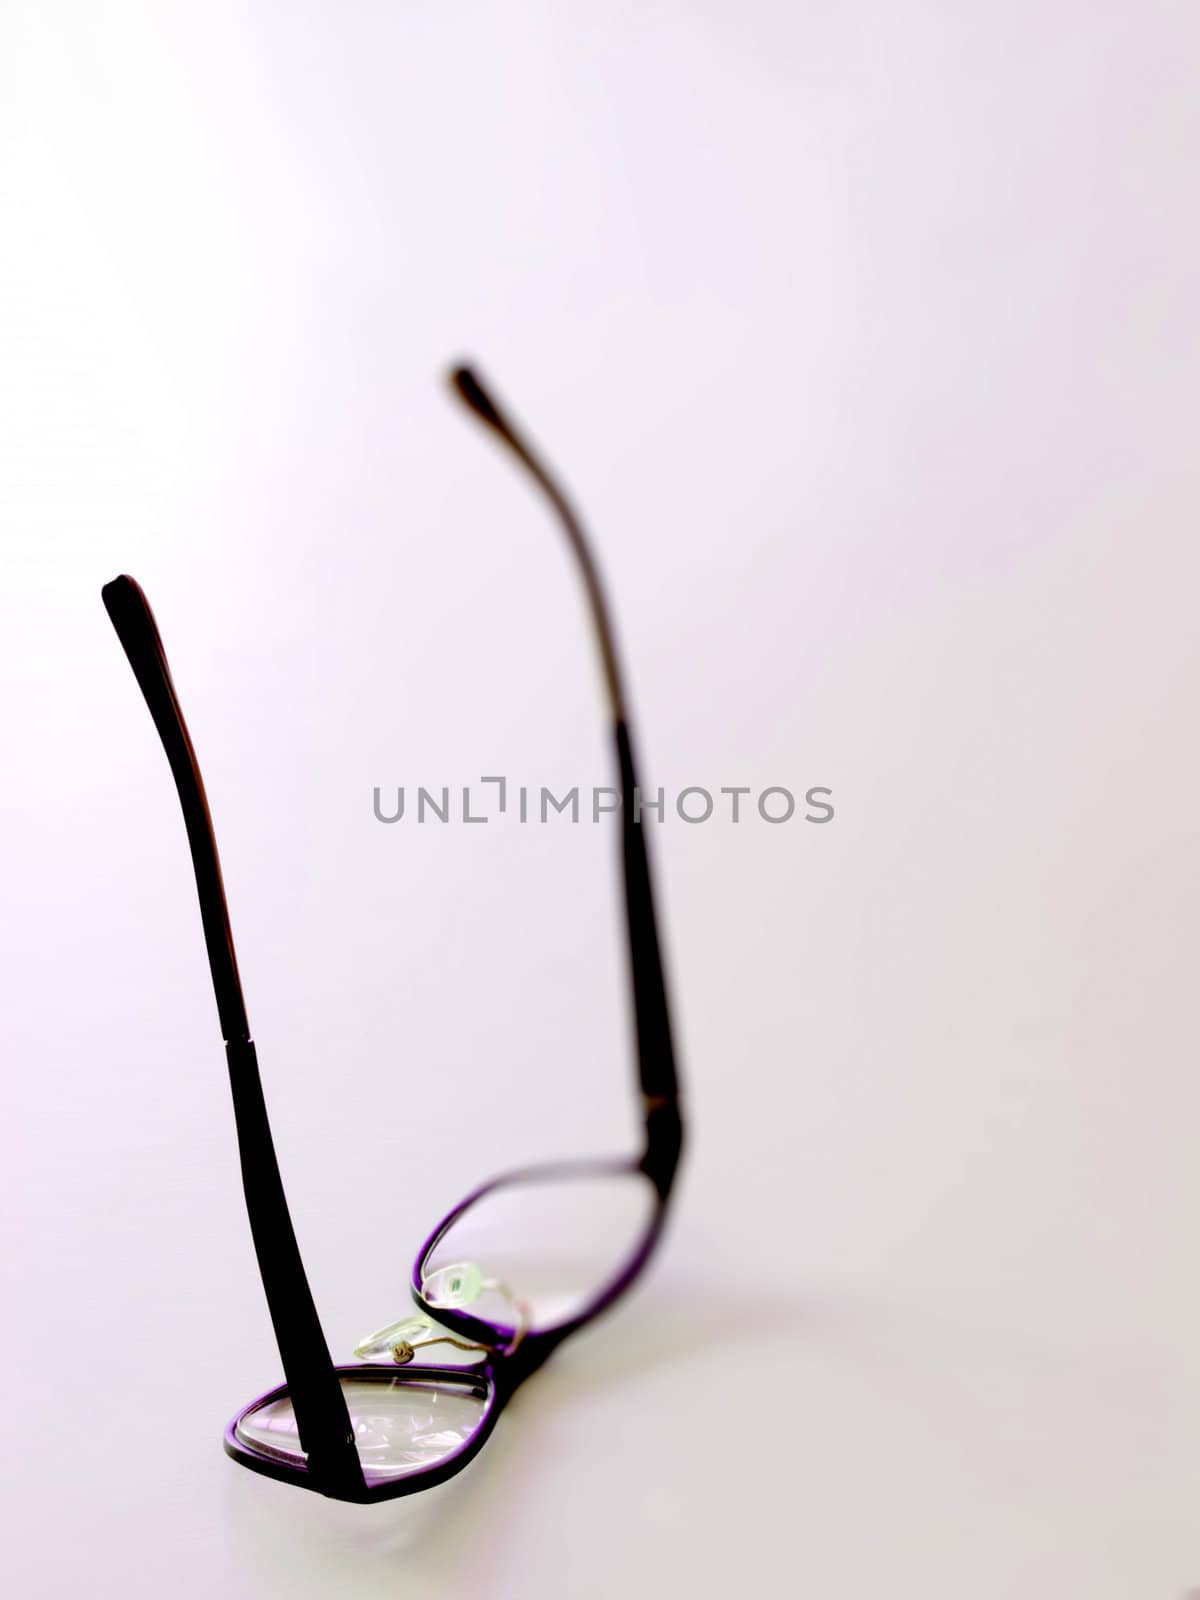 close up of fallen eye glasses